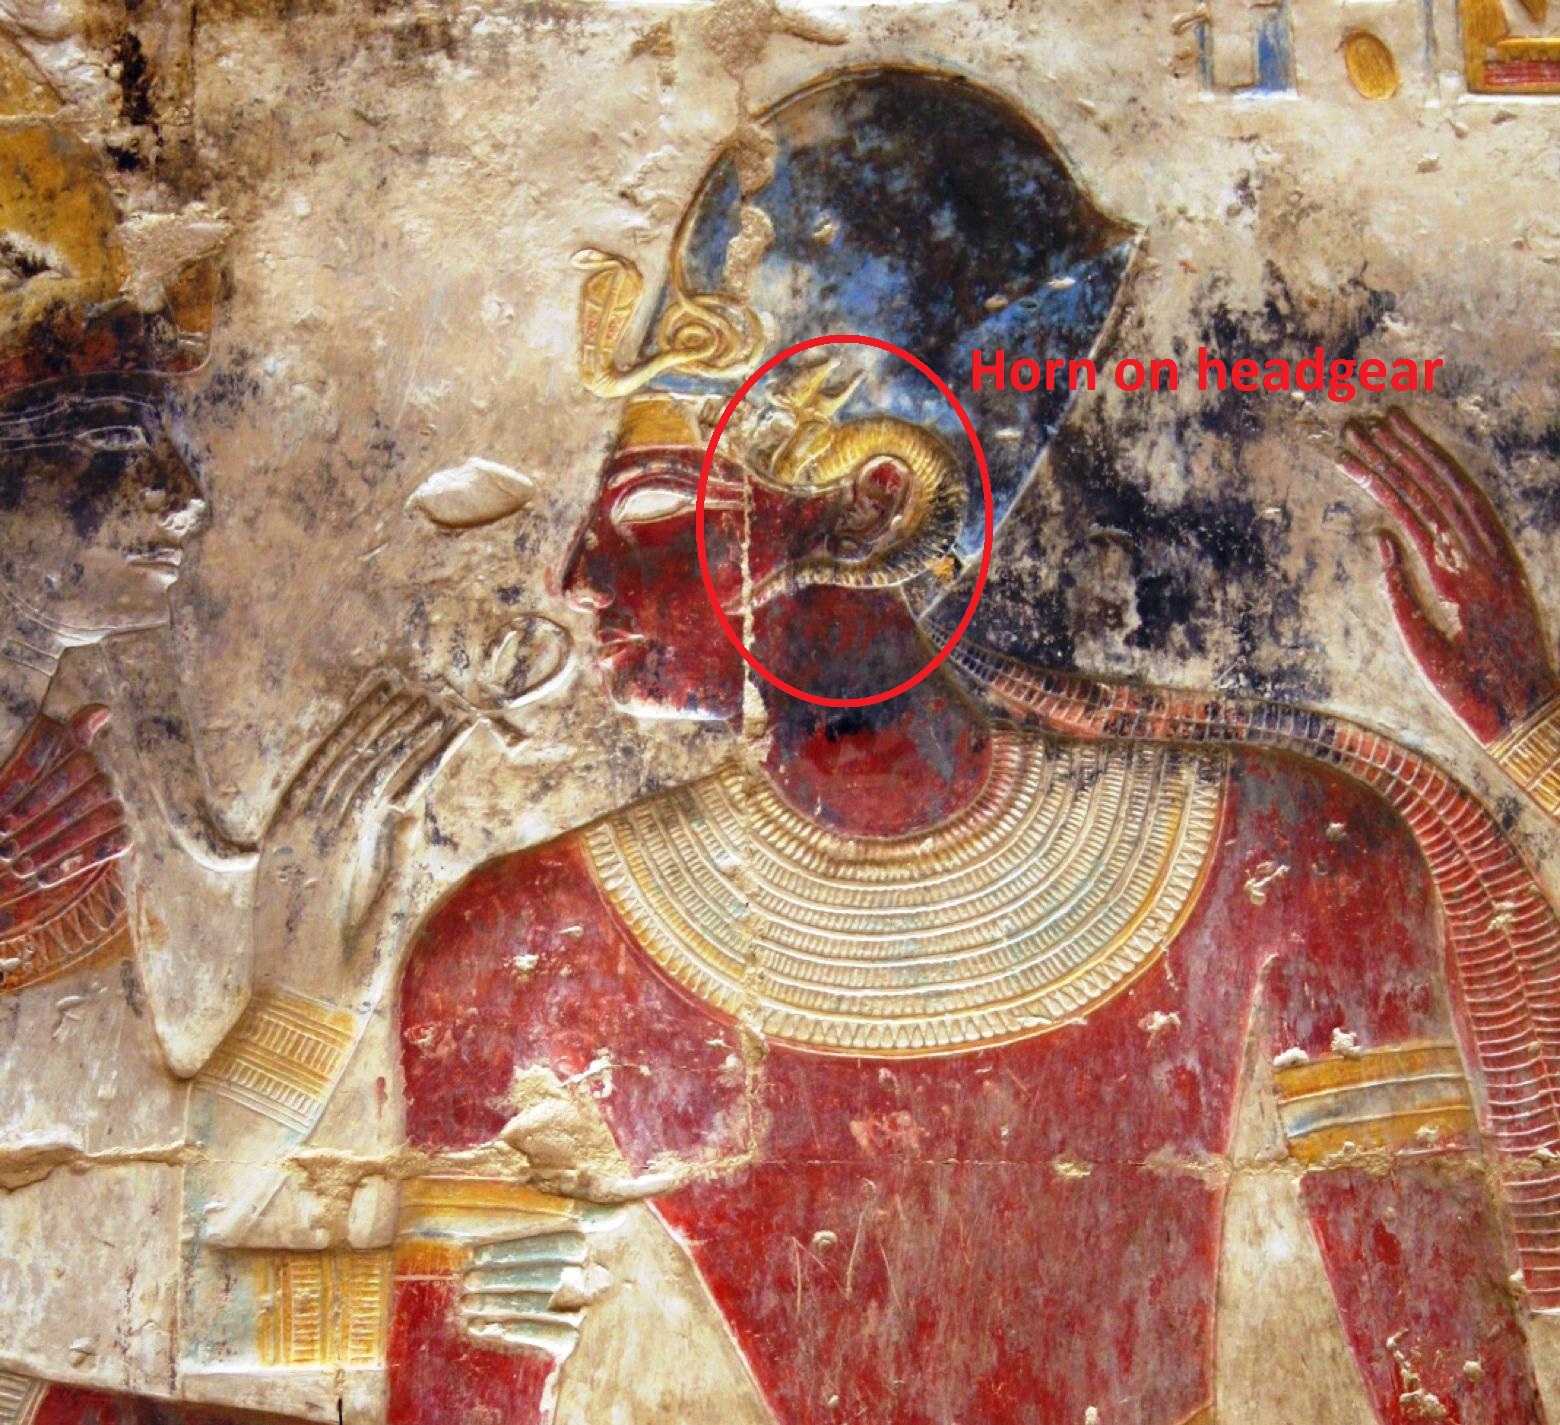 Variable of the Day, Ancient Egypt: Horns on headgear